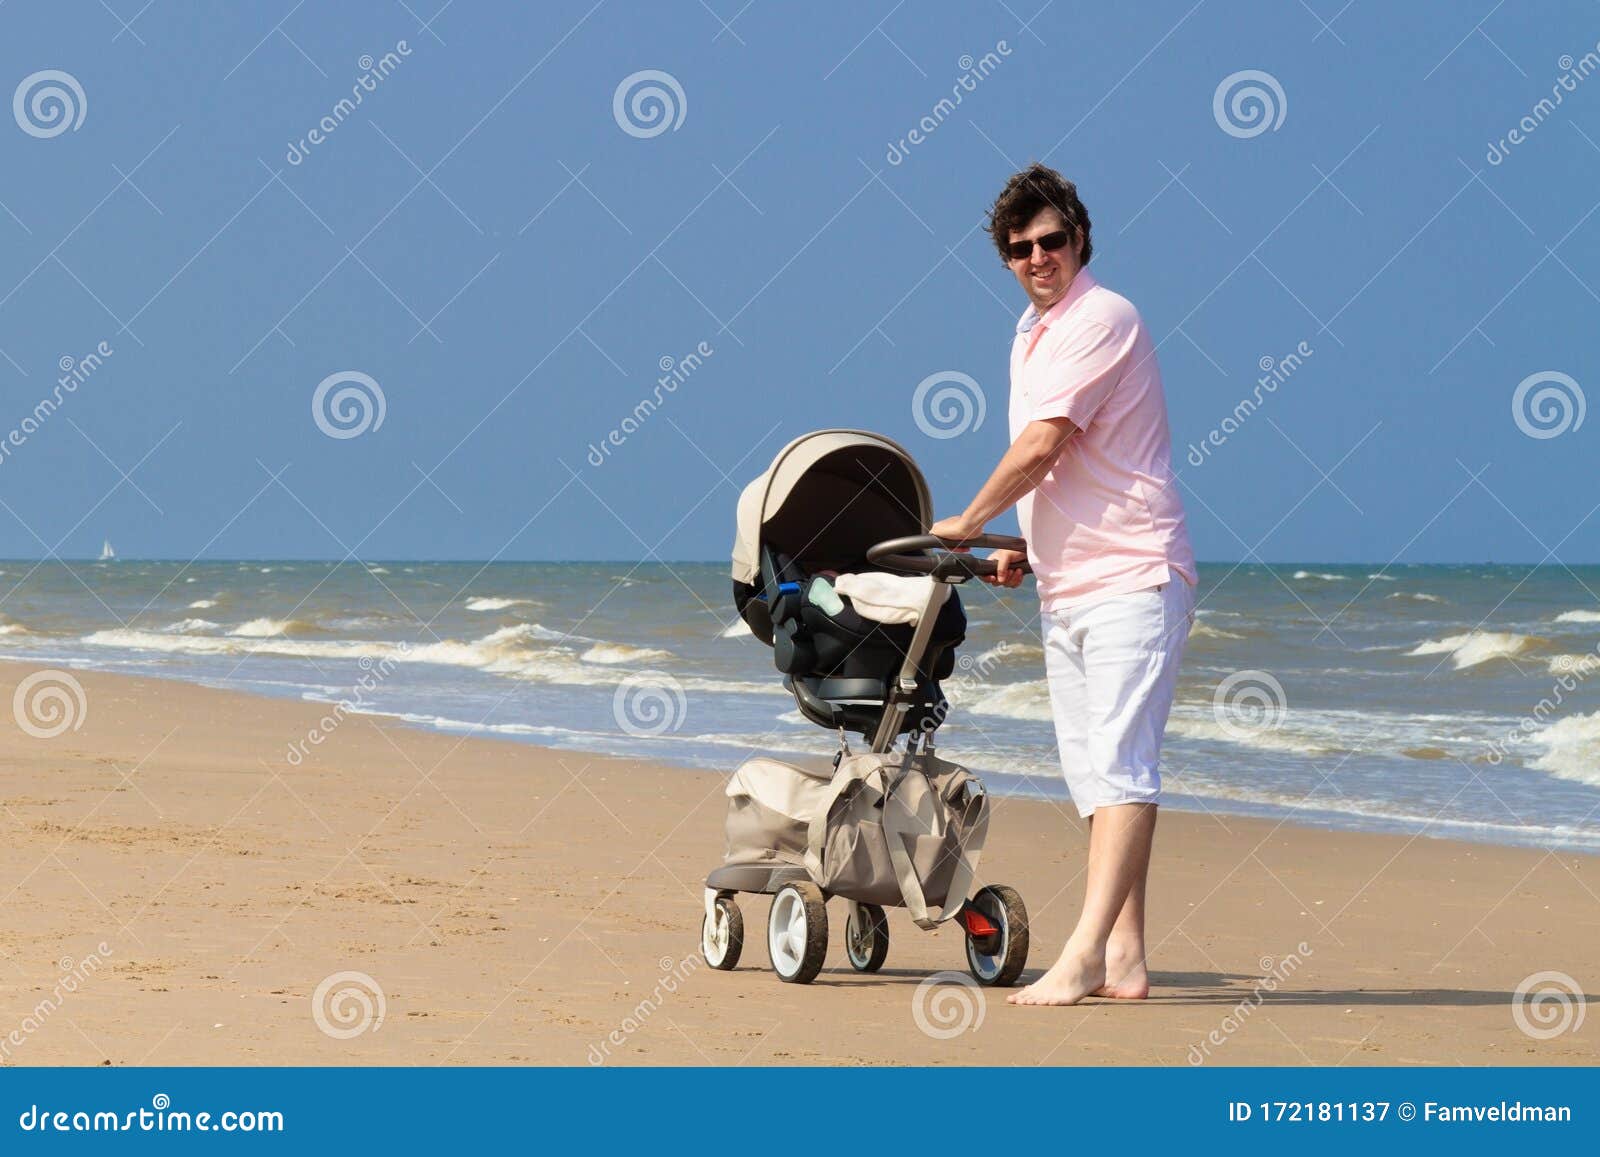 beach baby buggy